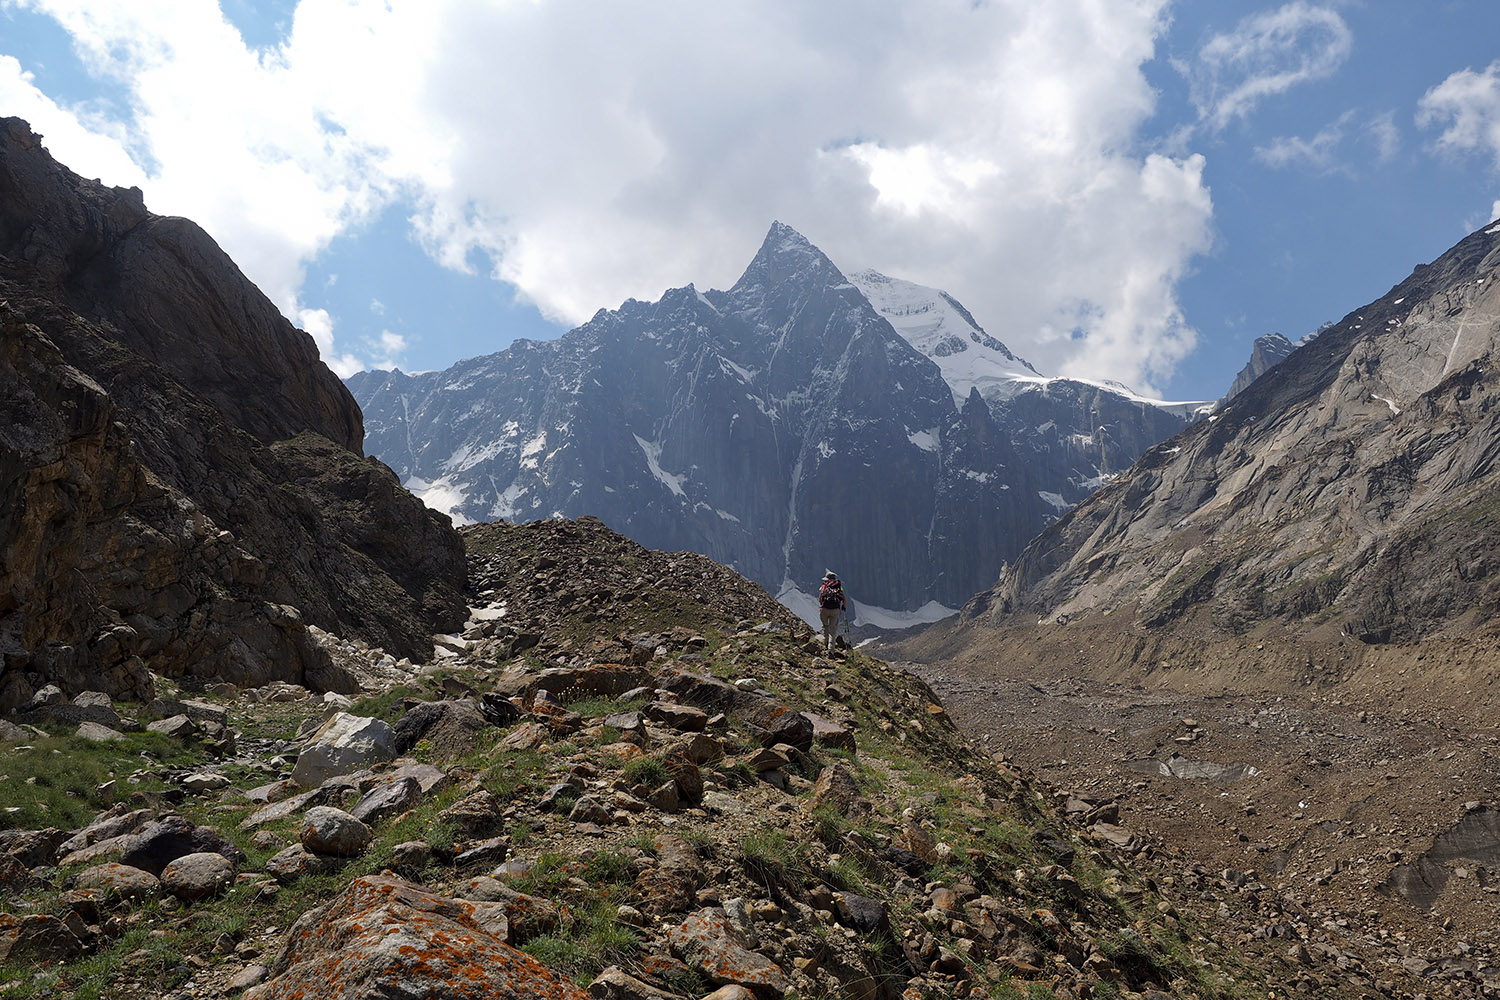 Ak Suu Peak Trekking Turkestan Mountains Kyrgyzstan